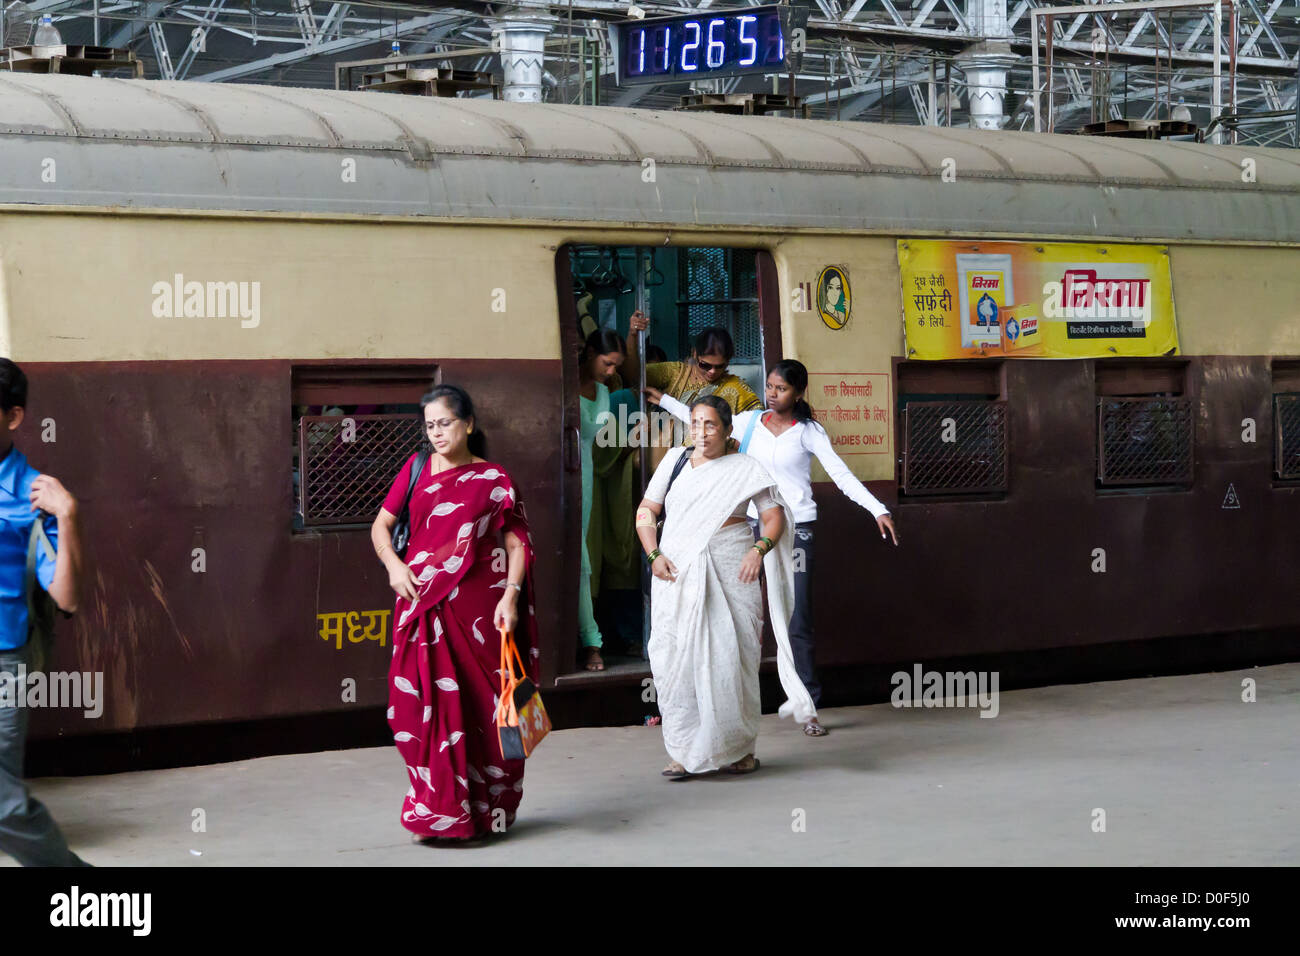 La vie quotidienne dans la Gare Chhatrapati Shivaji de Mumbai, Inde Banque D'Images